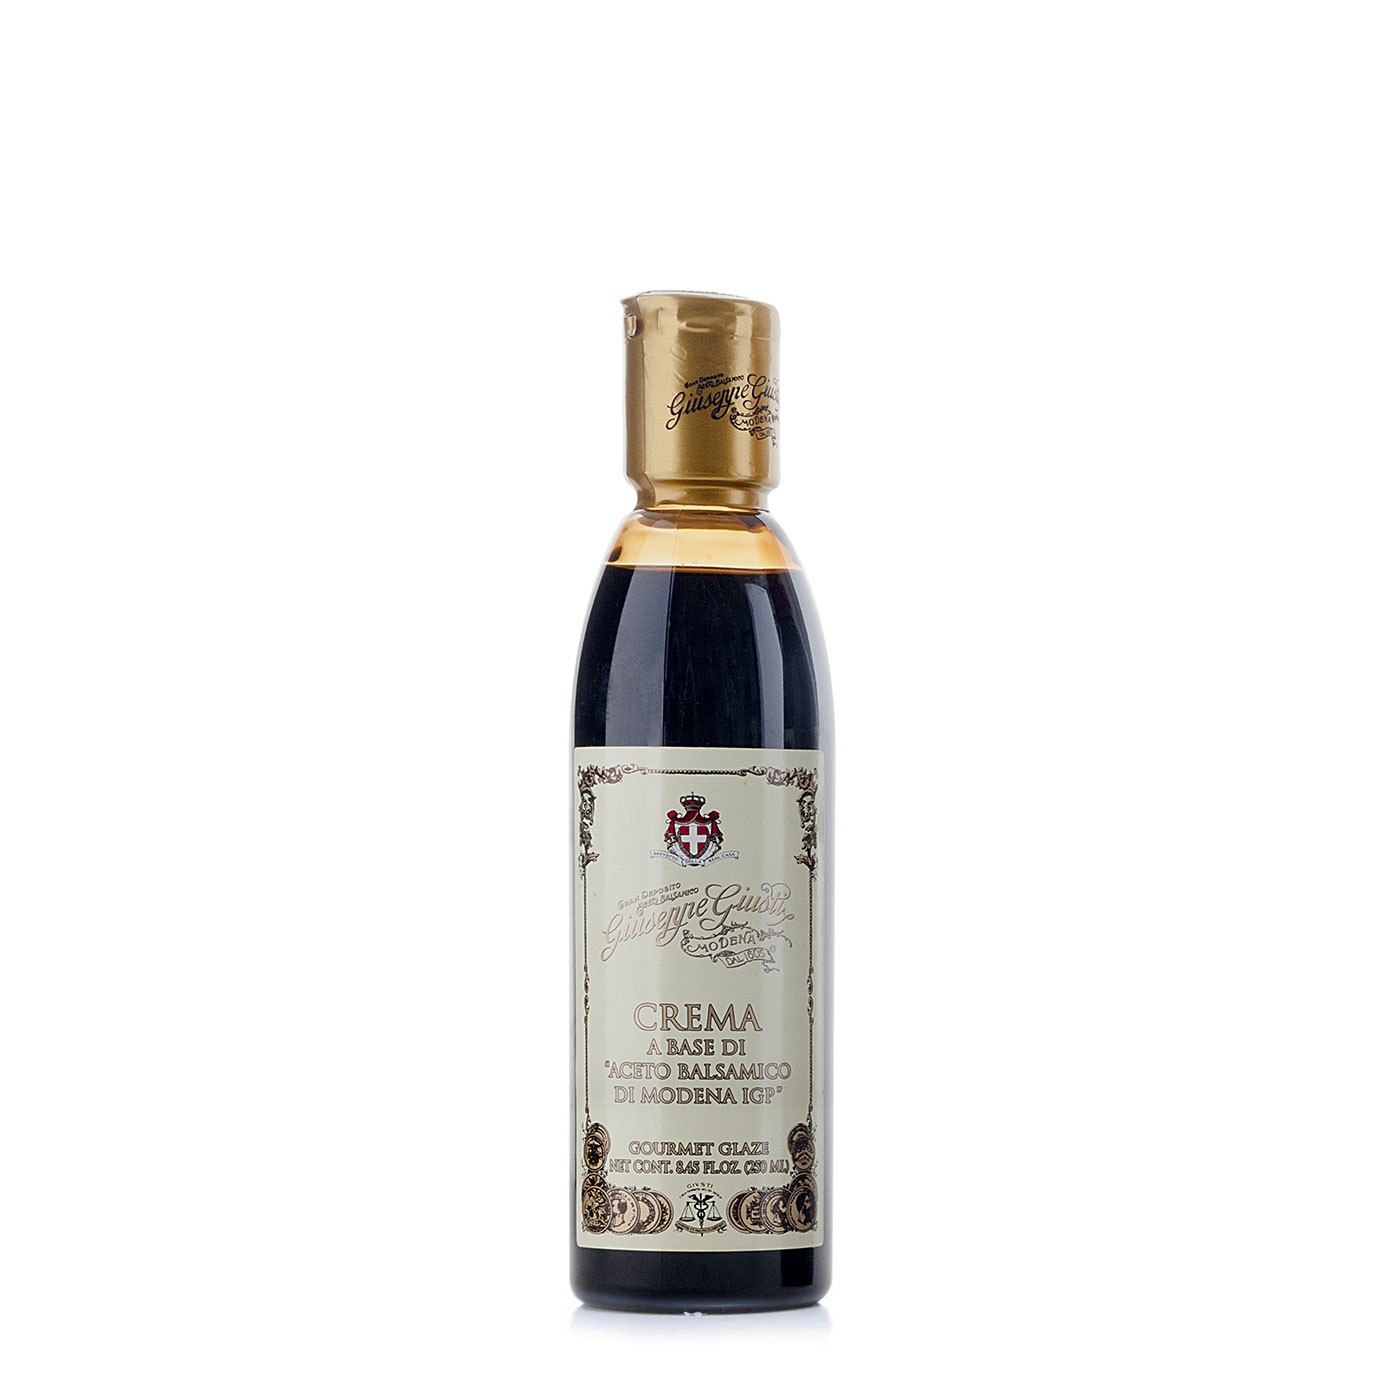 'Crema' Glaze with Balsamic Vinegar of Modena IGP 5 oz